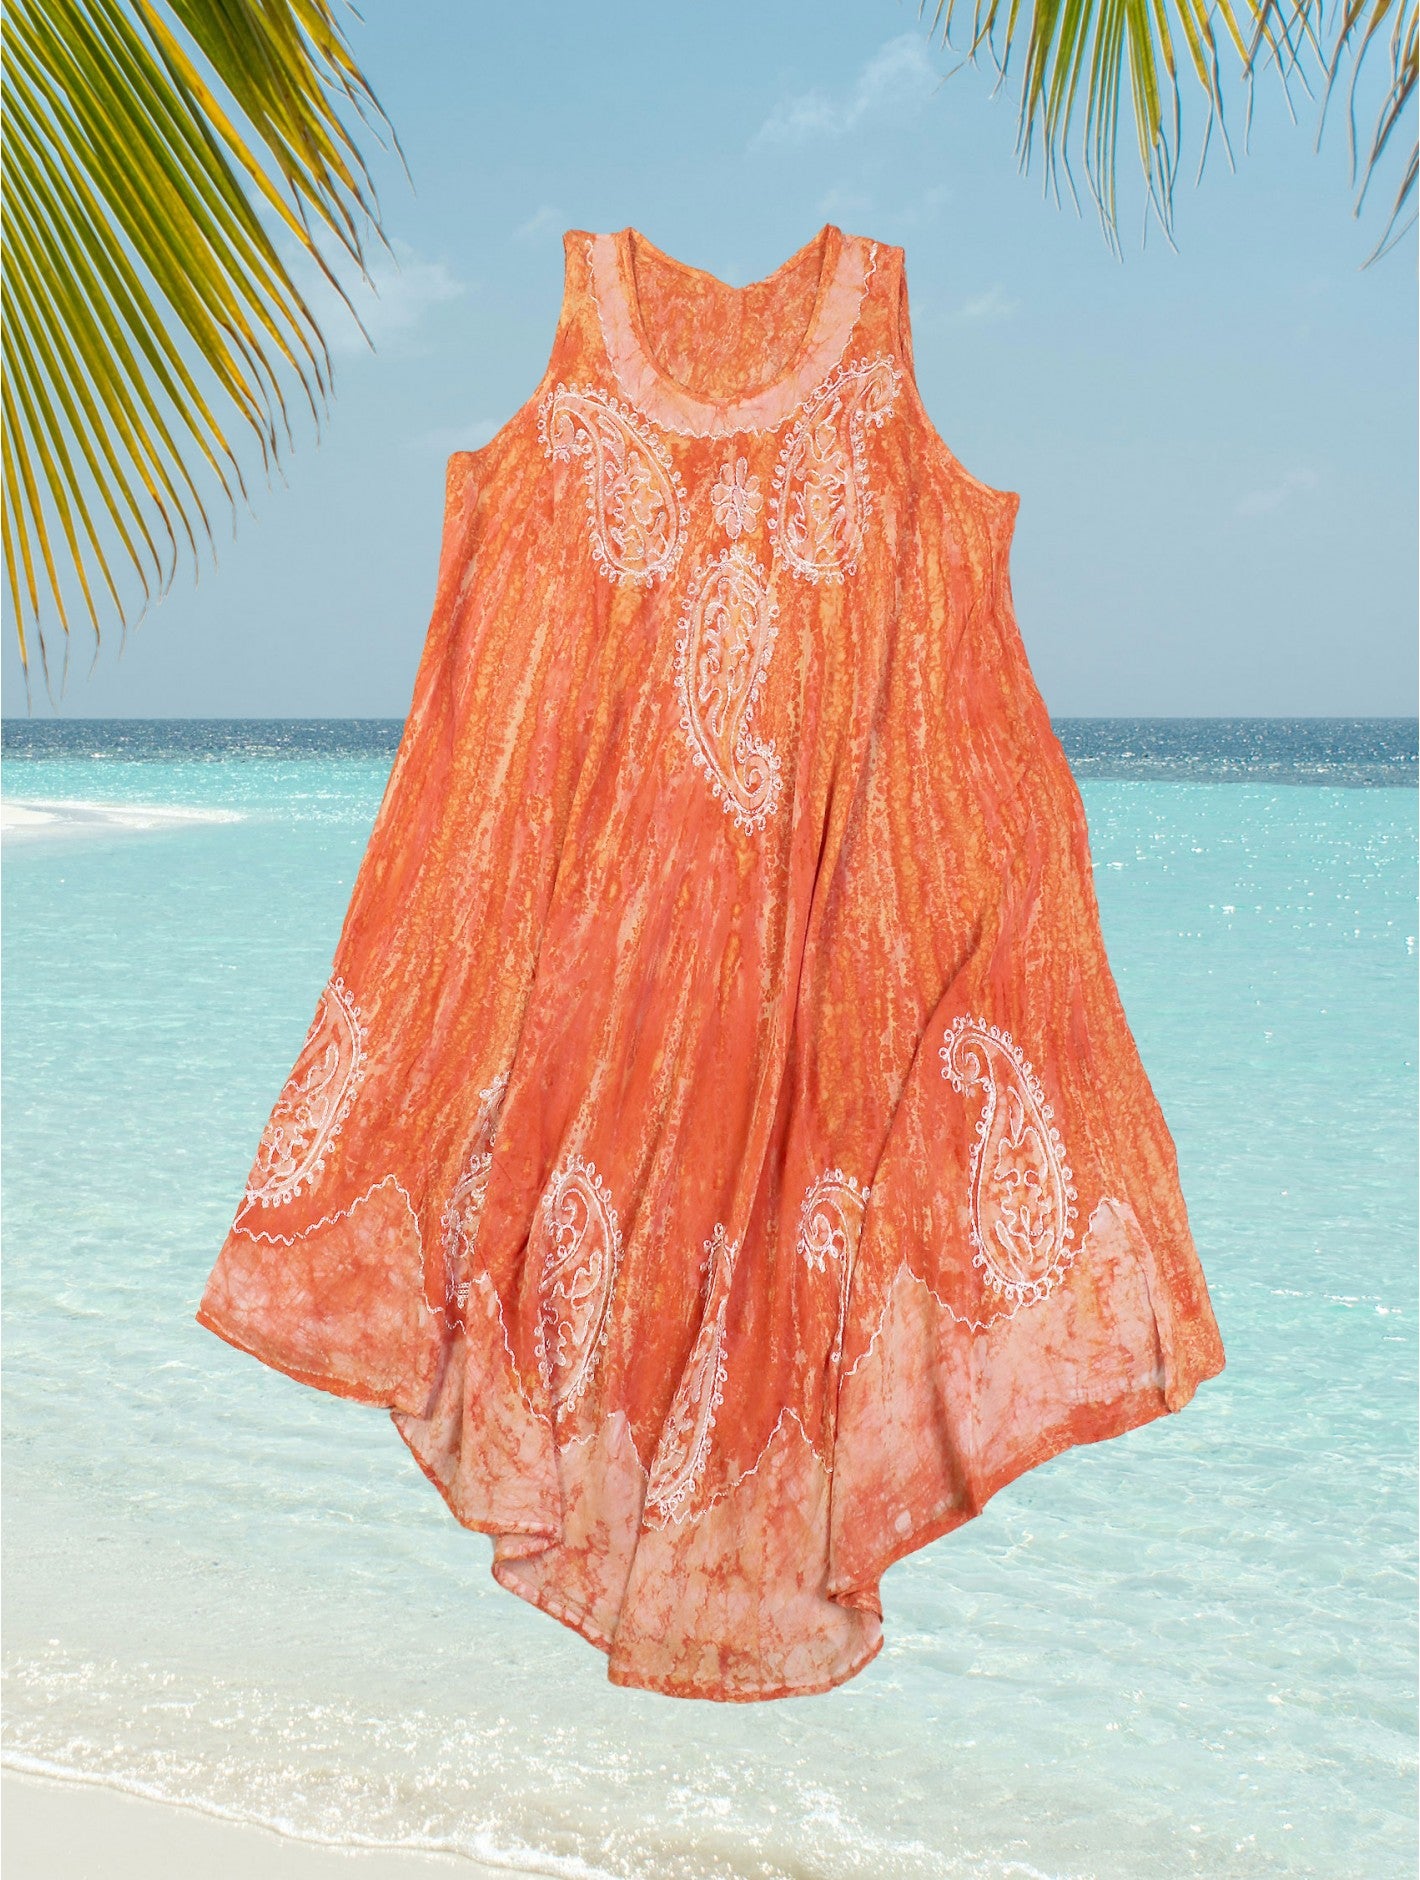 SALE Orange Embroidered Sun Dress